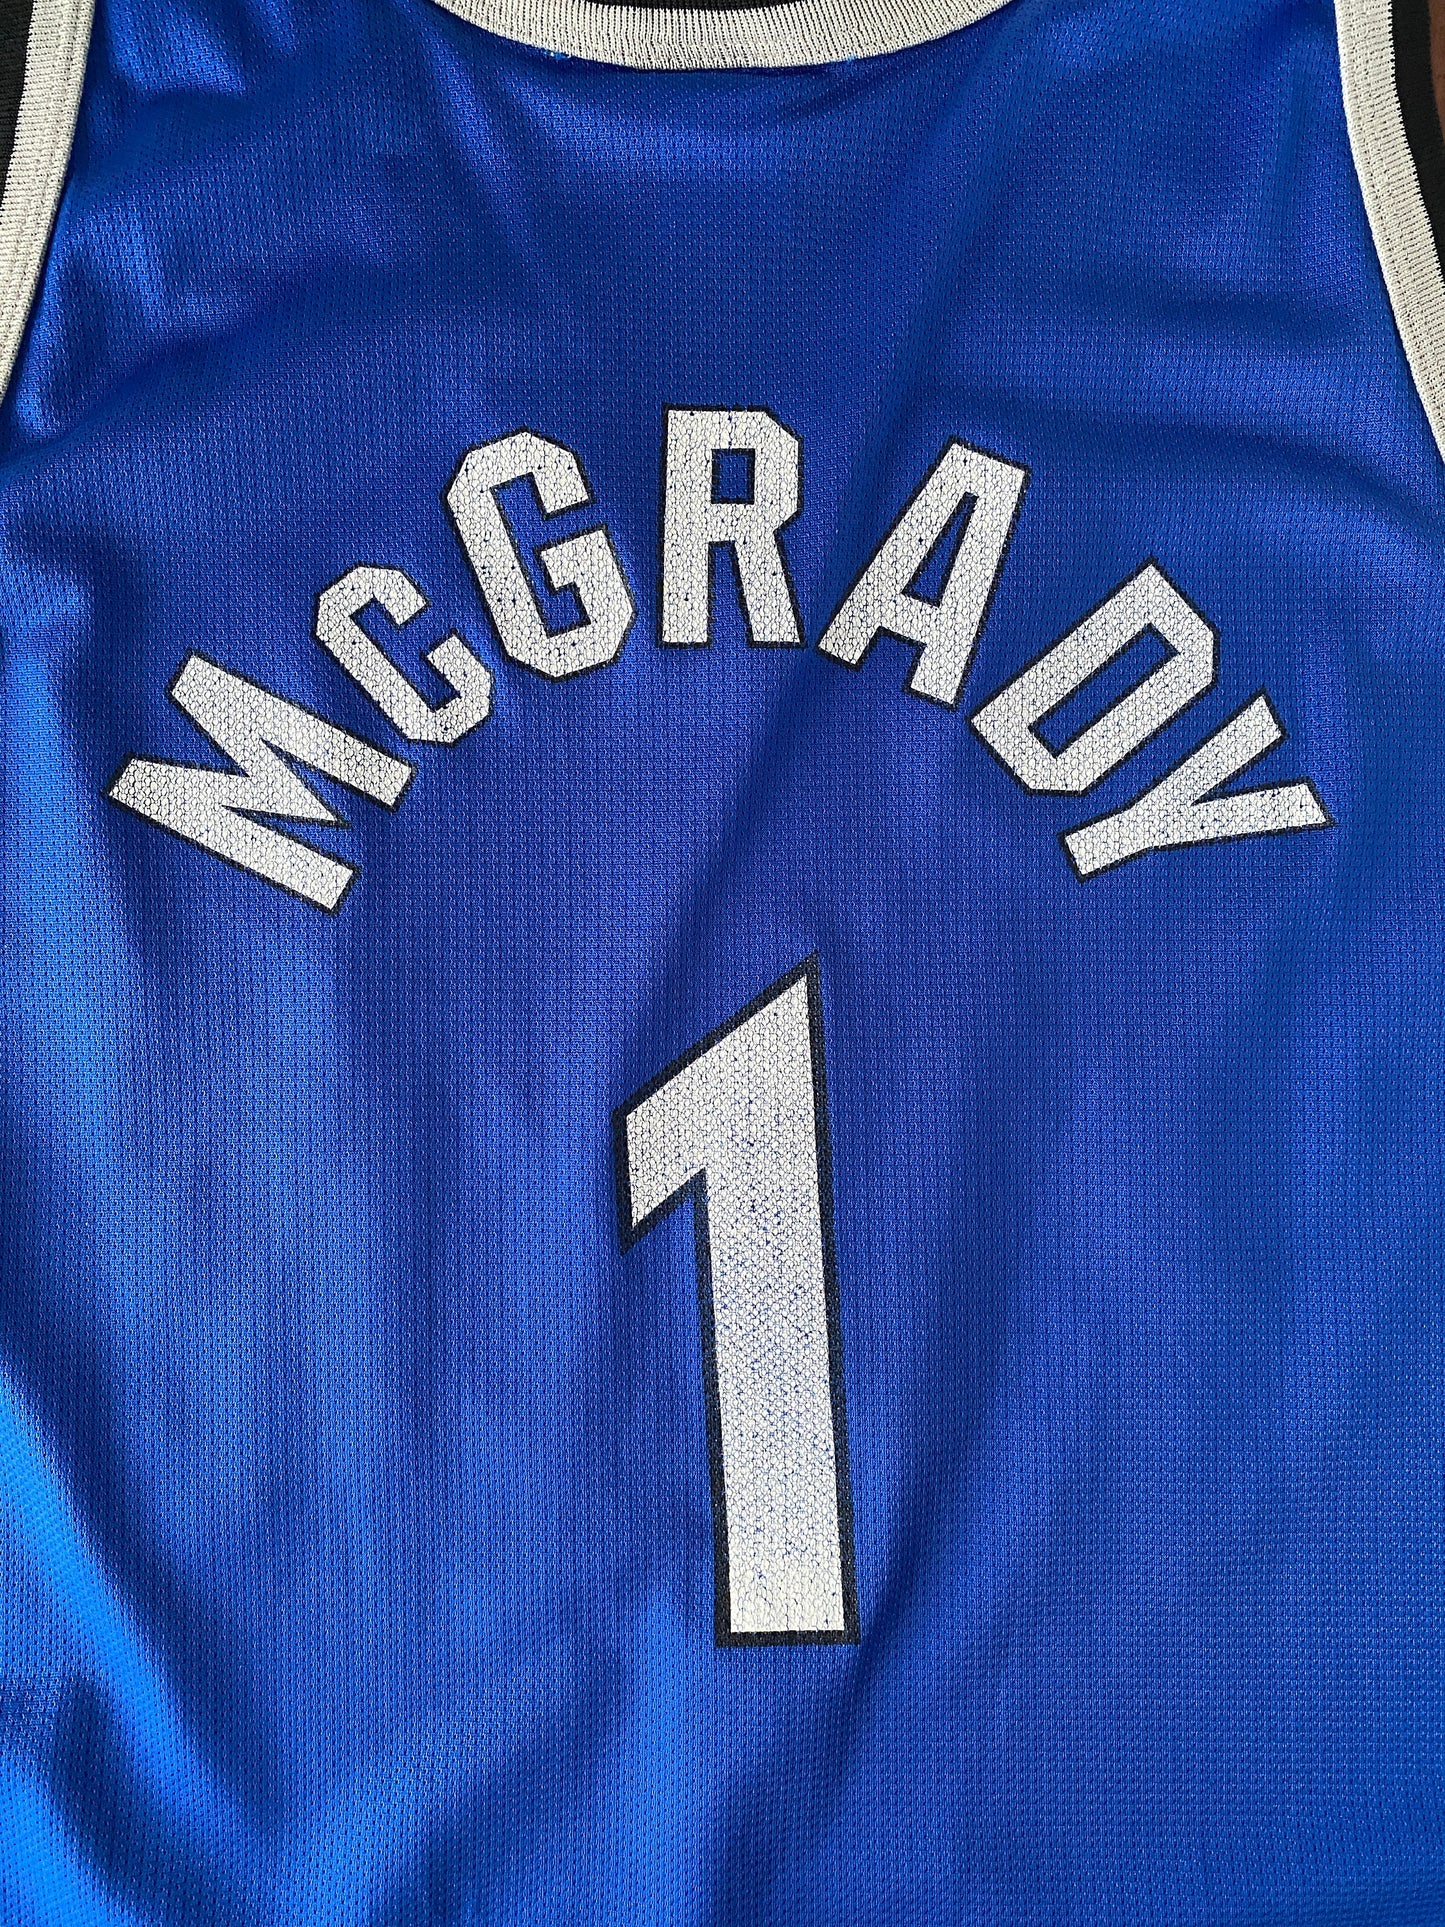 Size 52 USA. Rare Vintage Champion NBA Tracy Mc GRADY #1 Jersey Orlando Magic